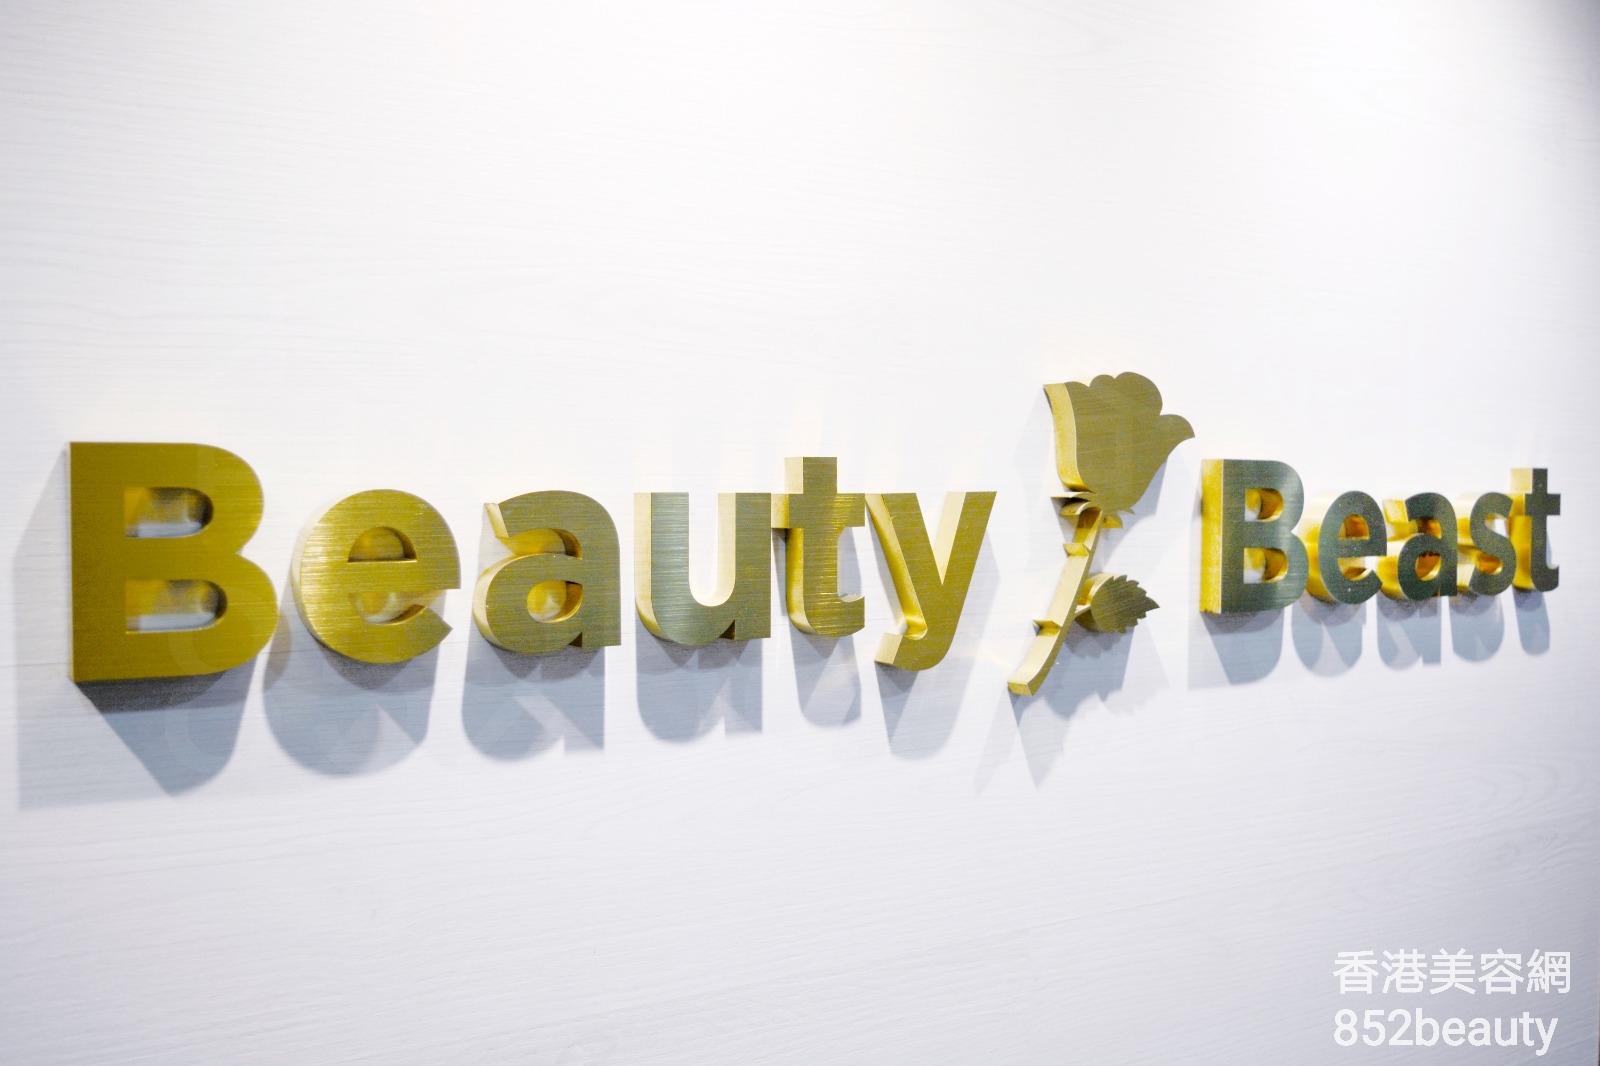 香港美容網 Hong Kong Beauty Salon 美容院 / 美容師: Beauty or Beast